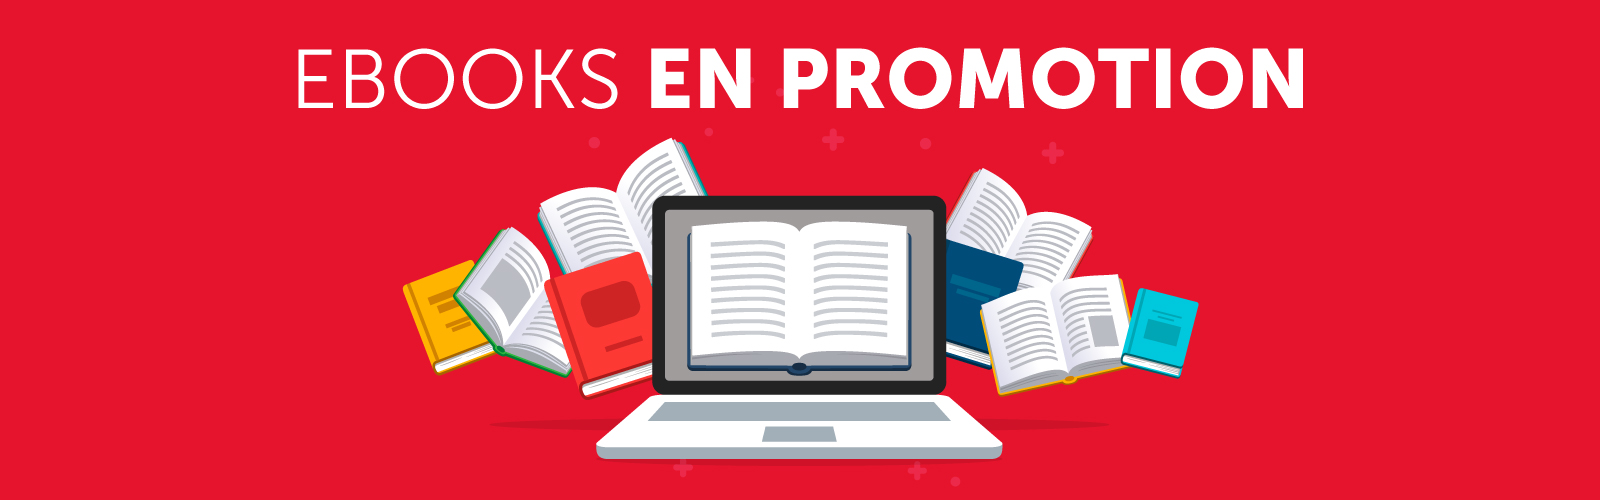 Ebook Sciences Po Promotion